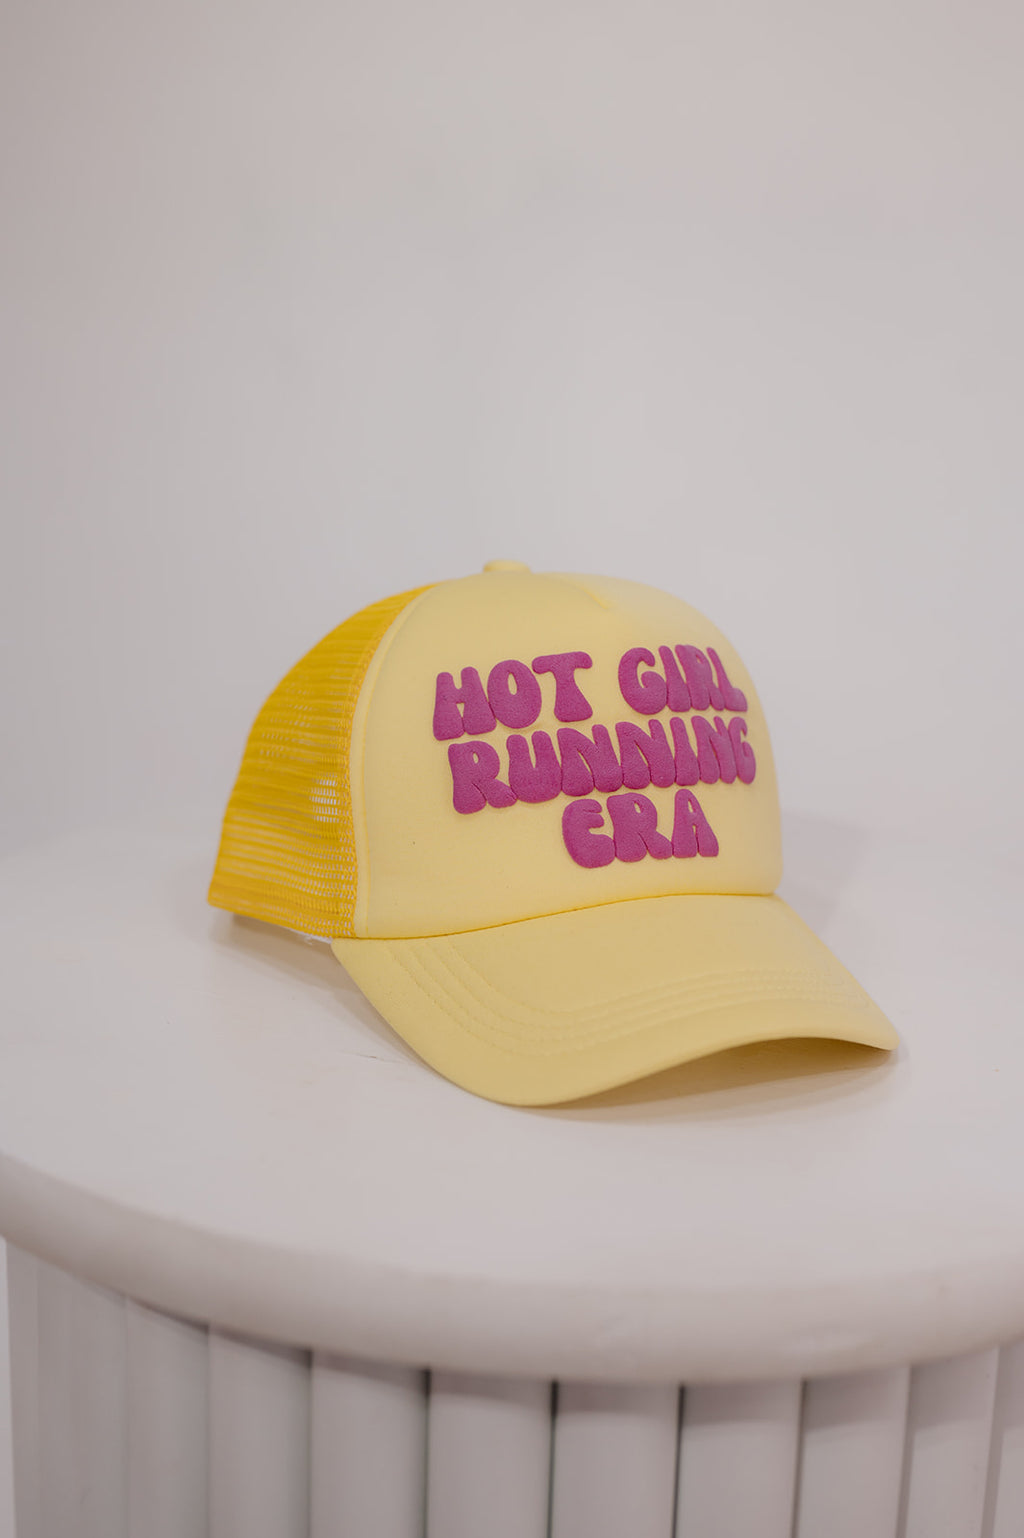 I Love LA Hats Trucker Hats Baseball Cap Running Hat Sun Hat Cooling Hats  for Men Women Teenagers Red